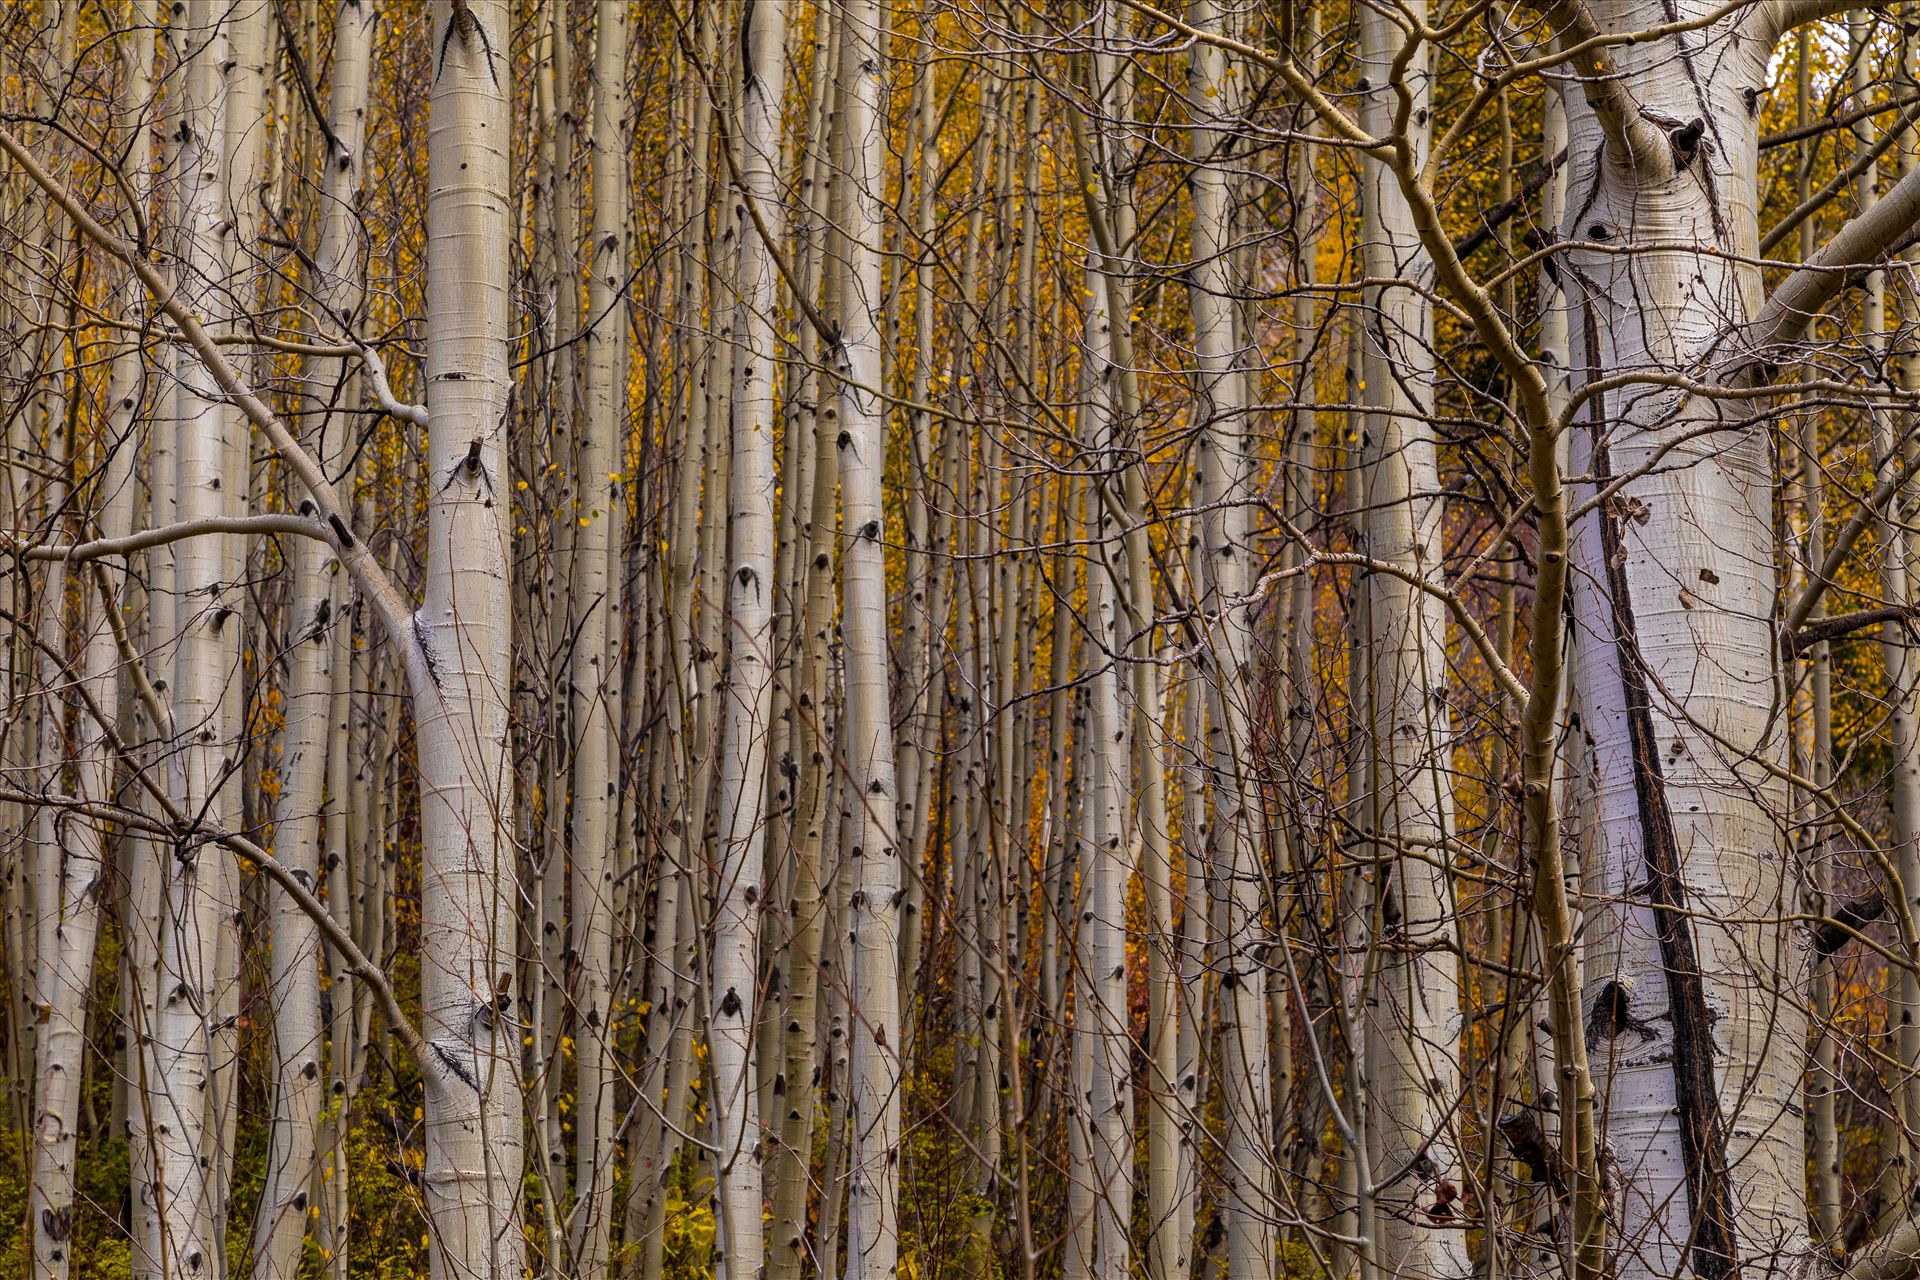 Simple Aspens - A dense grove of aspens near Marble, Colorado, in the fall. by Scott Smith Photos